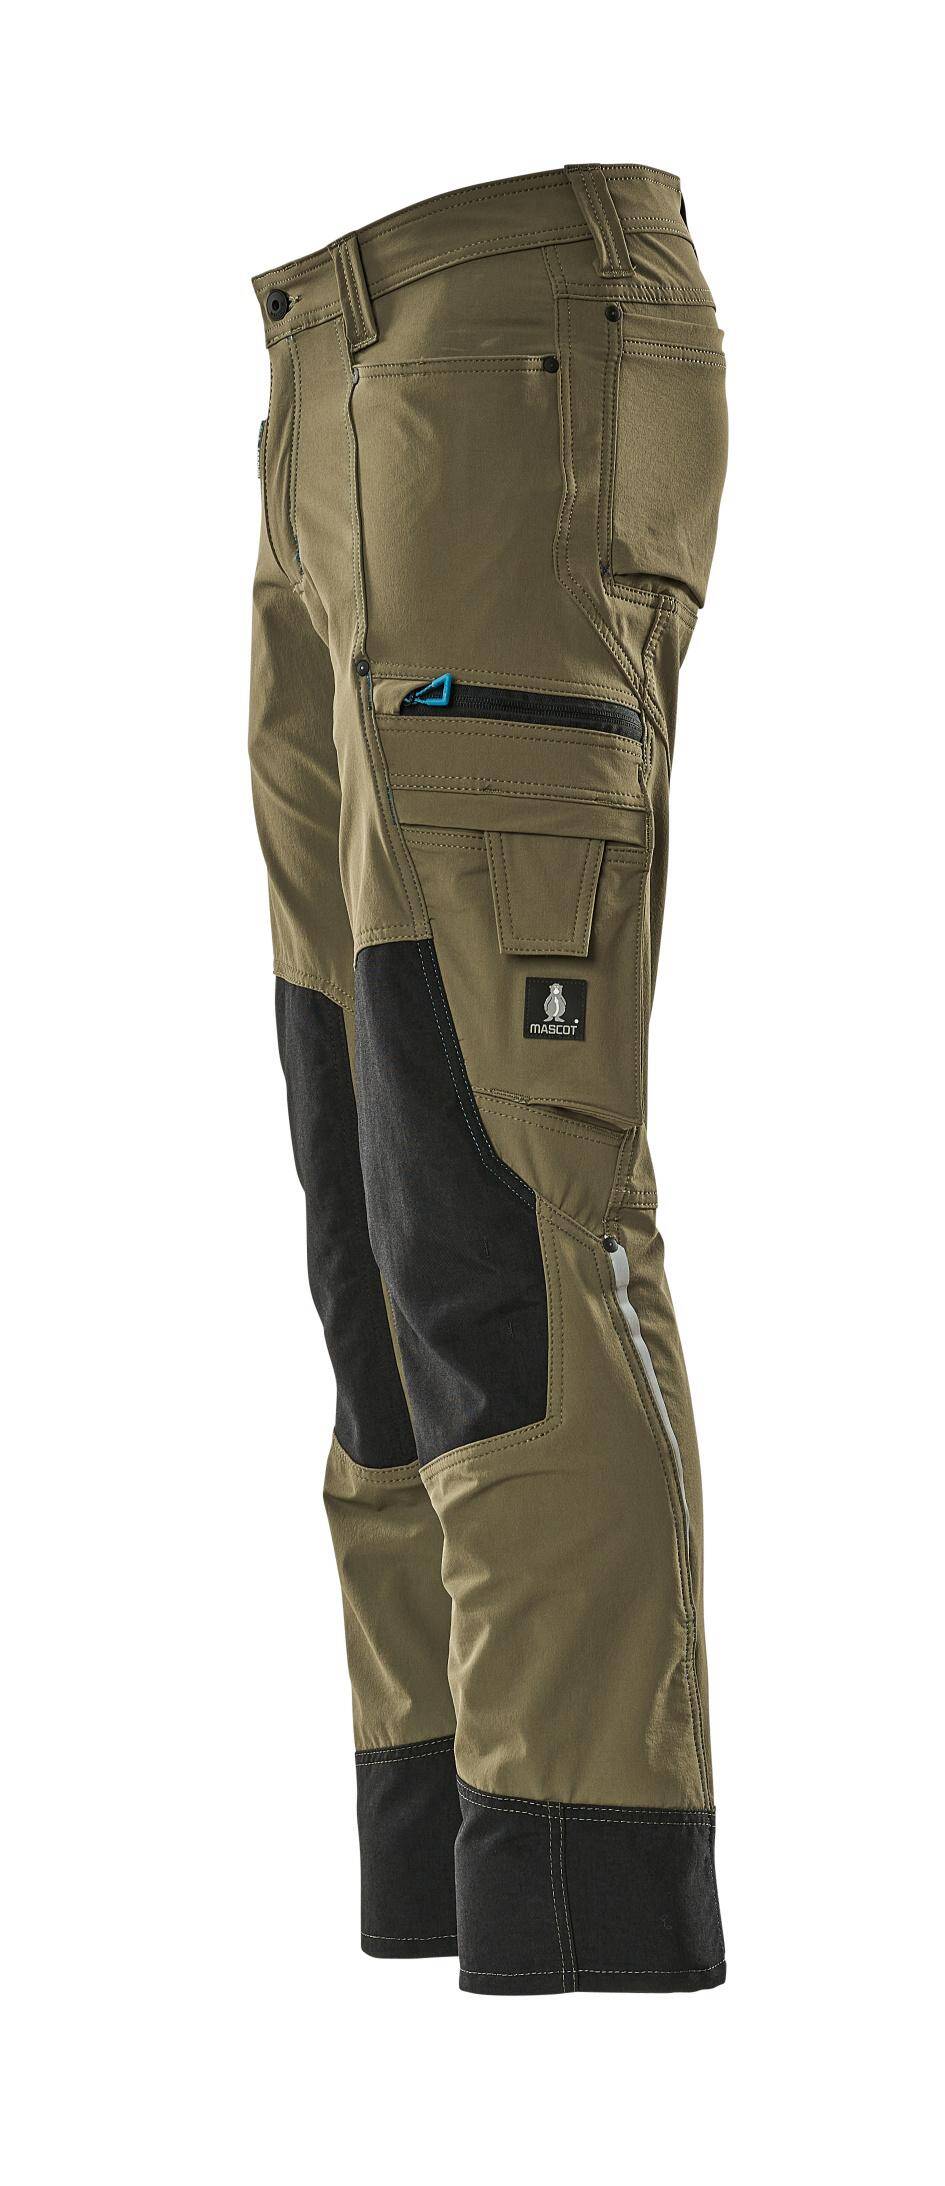 Trousers with kneepad pockets Advanced khaki (Photo 3)